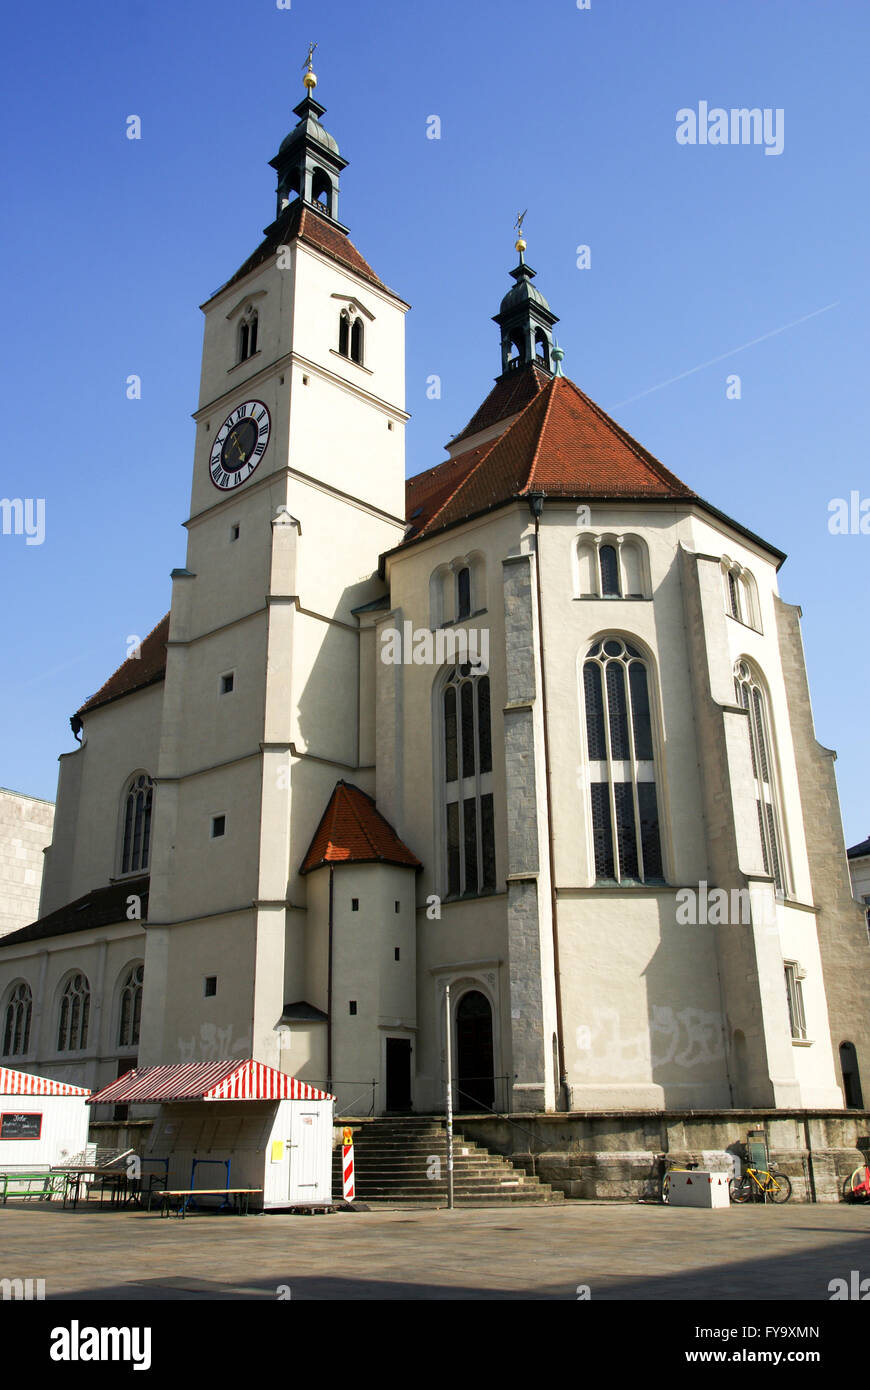 Neupfarrkirche church on Neupfarrplatz, Regensburg, Upper Palatinate, Bavaria, Germany Stock Photo